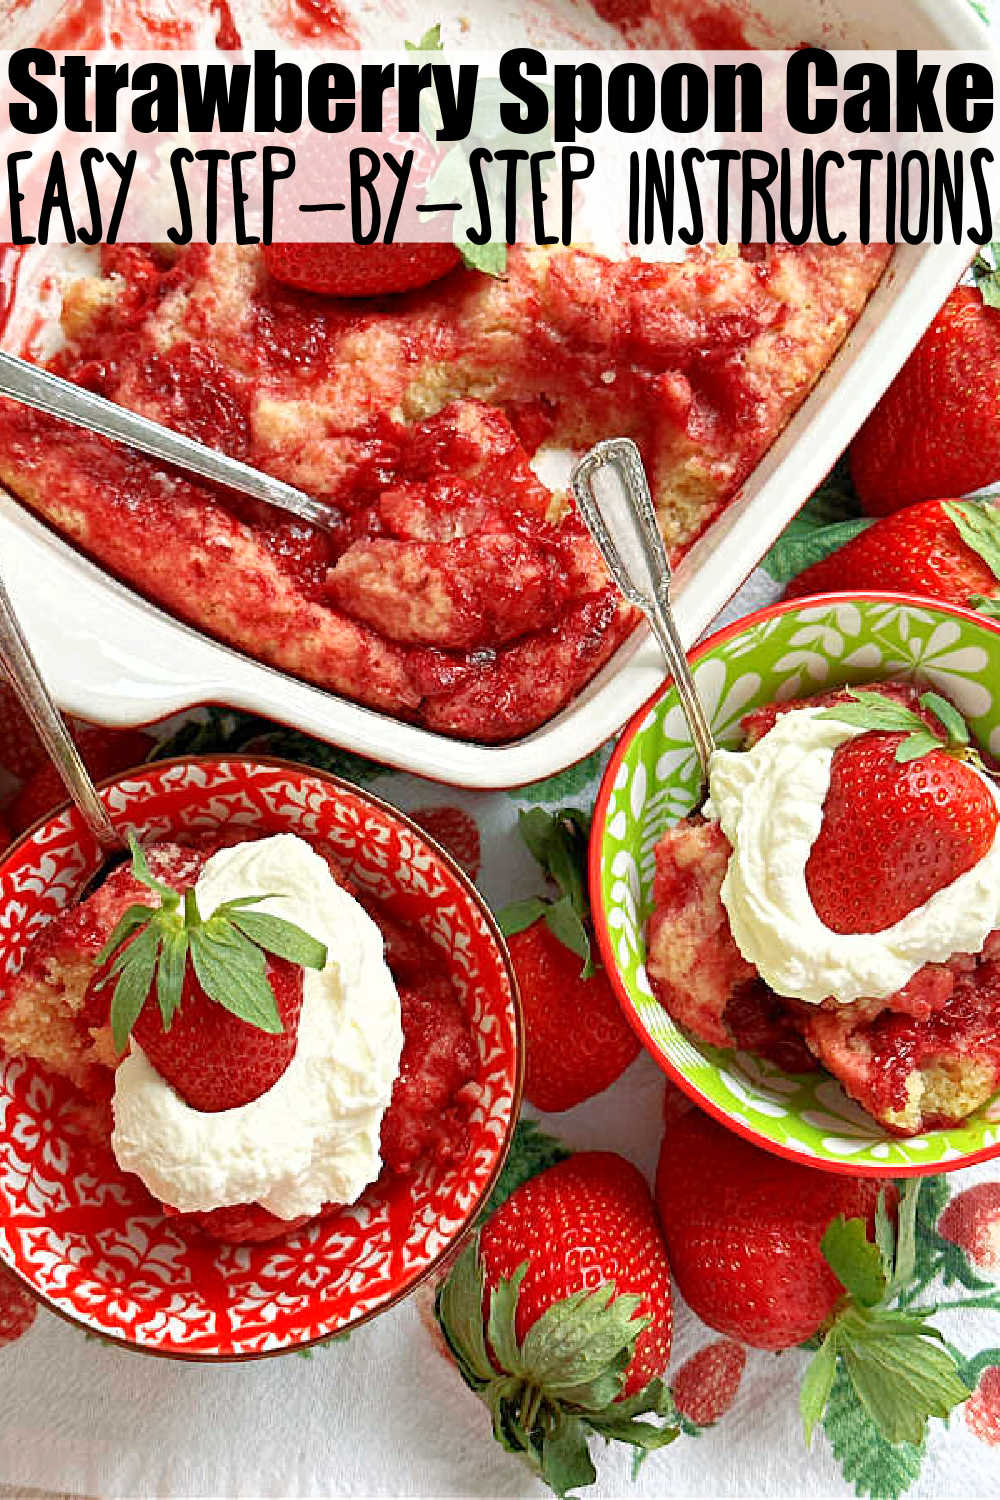 Strawberry Spoon Cake | Foodtastic Mom #strawberryspooncake #strawberrycake #cakerecipes via @foodtasticmom